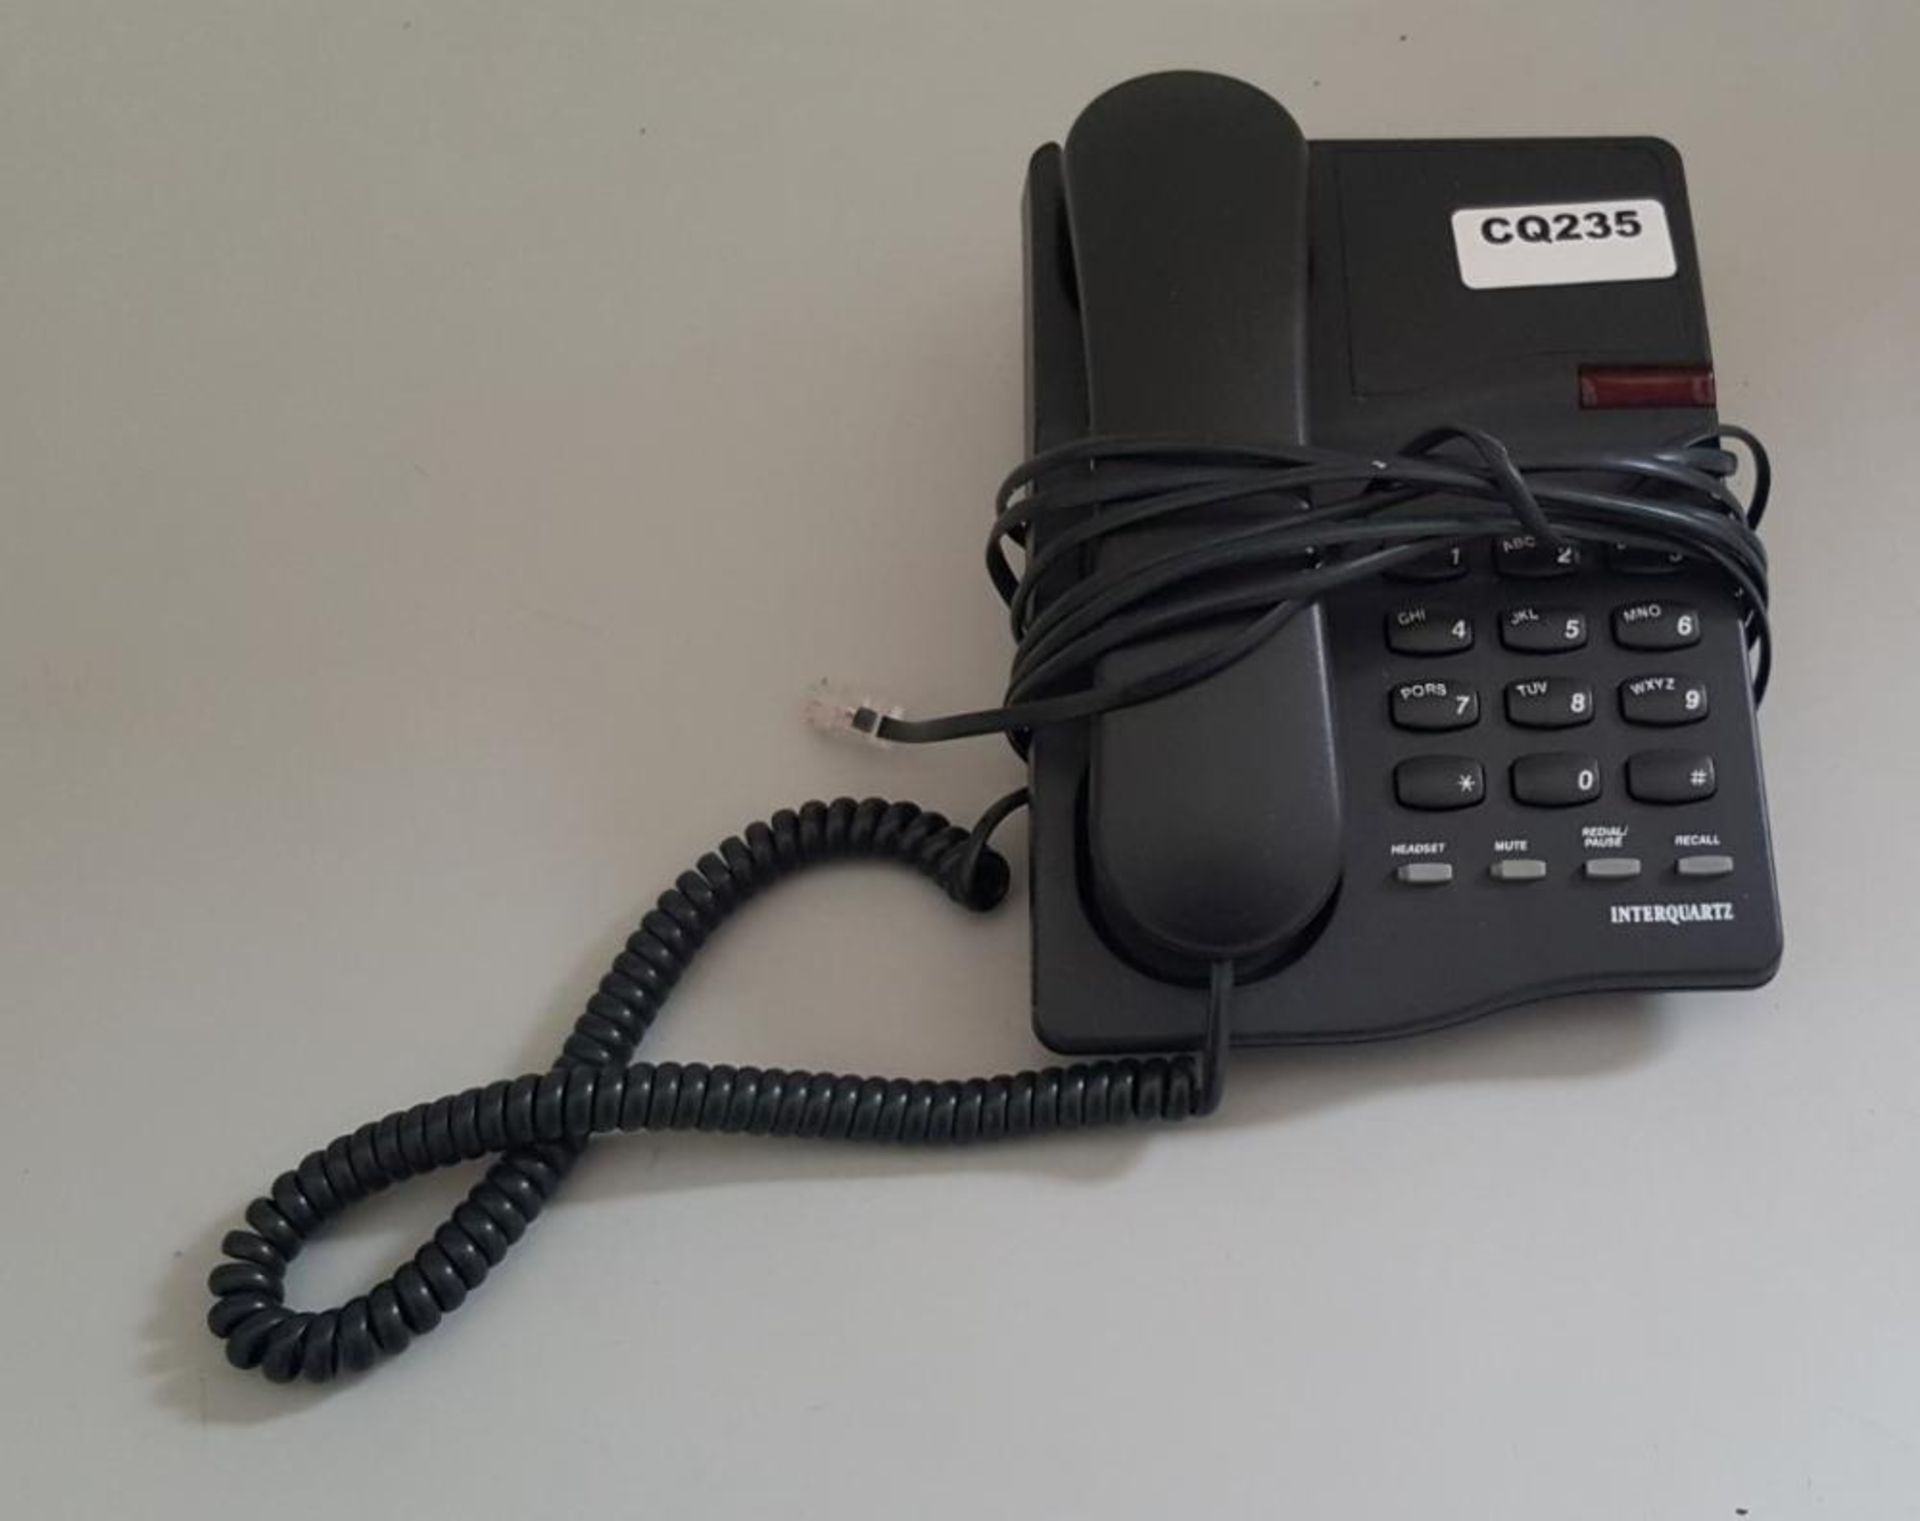 1 x Interquartz Gemini Basic 9330 Corded Office Phone - Ref CQ235/K2 - CL379 - Location: Altrincham